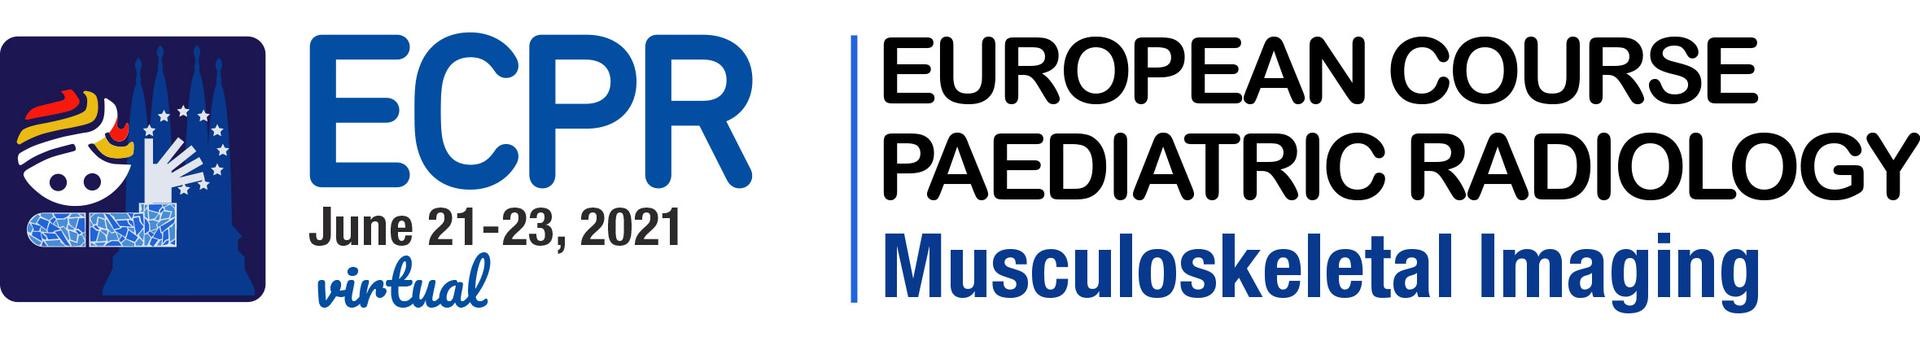 European Course of Paediatric Radiology (virtual) 21-23 June, 2021